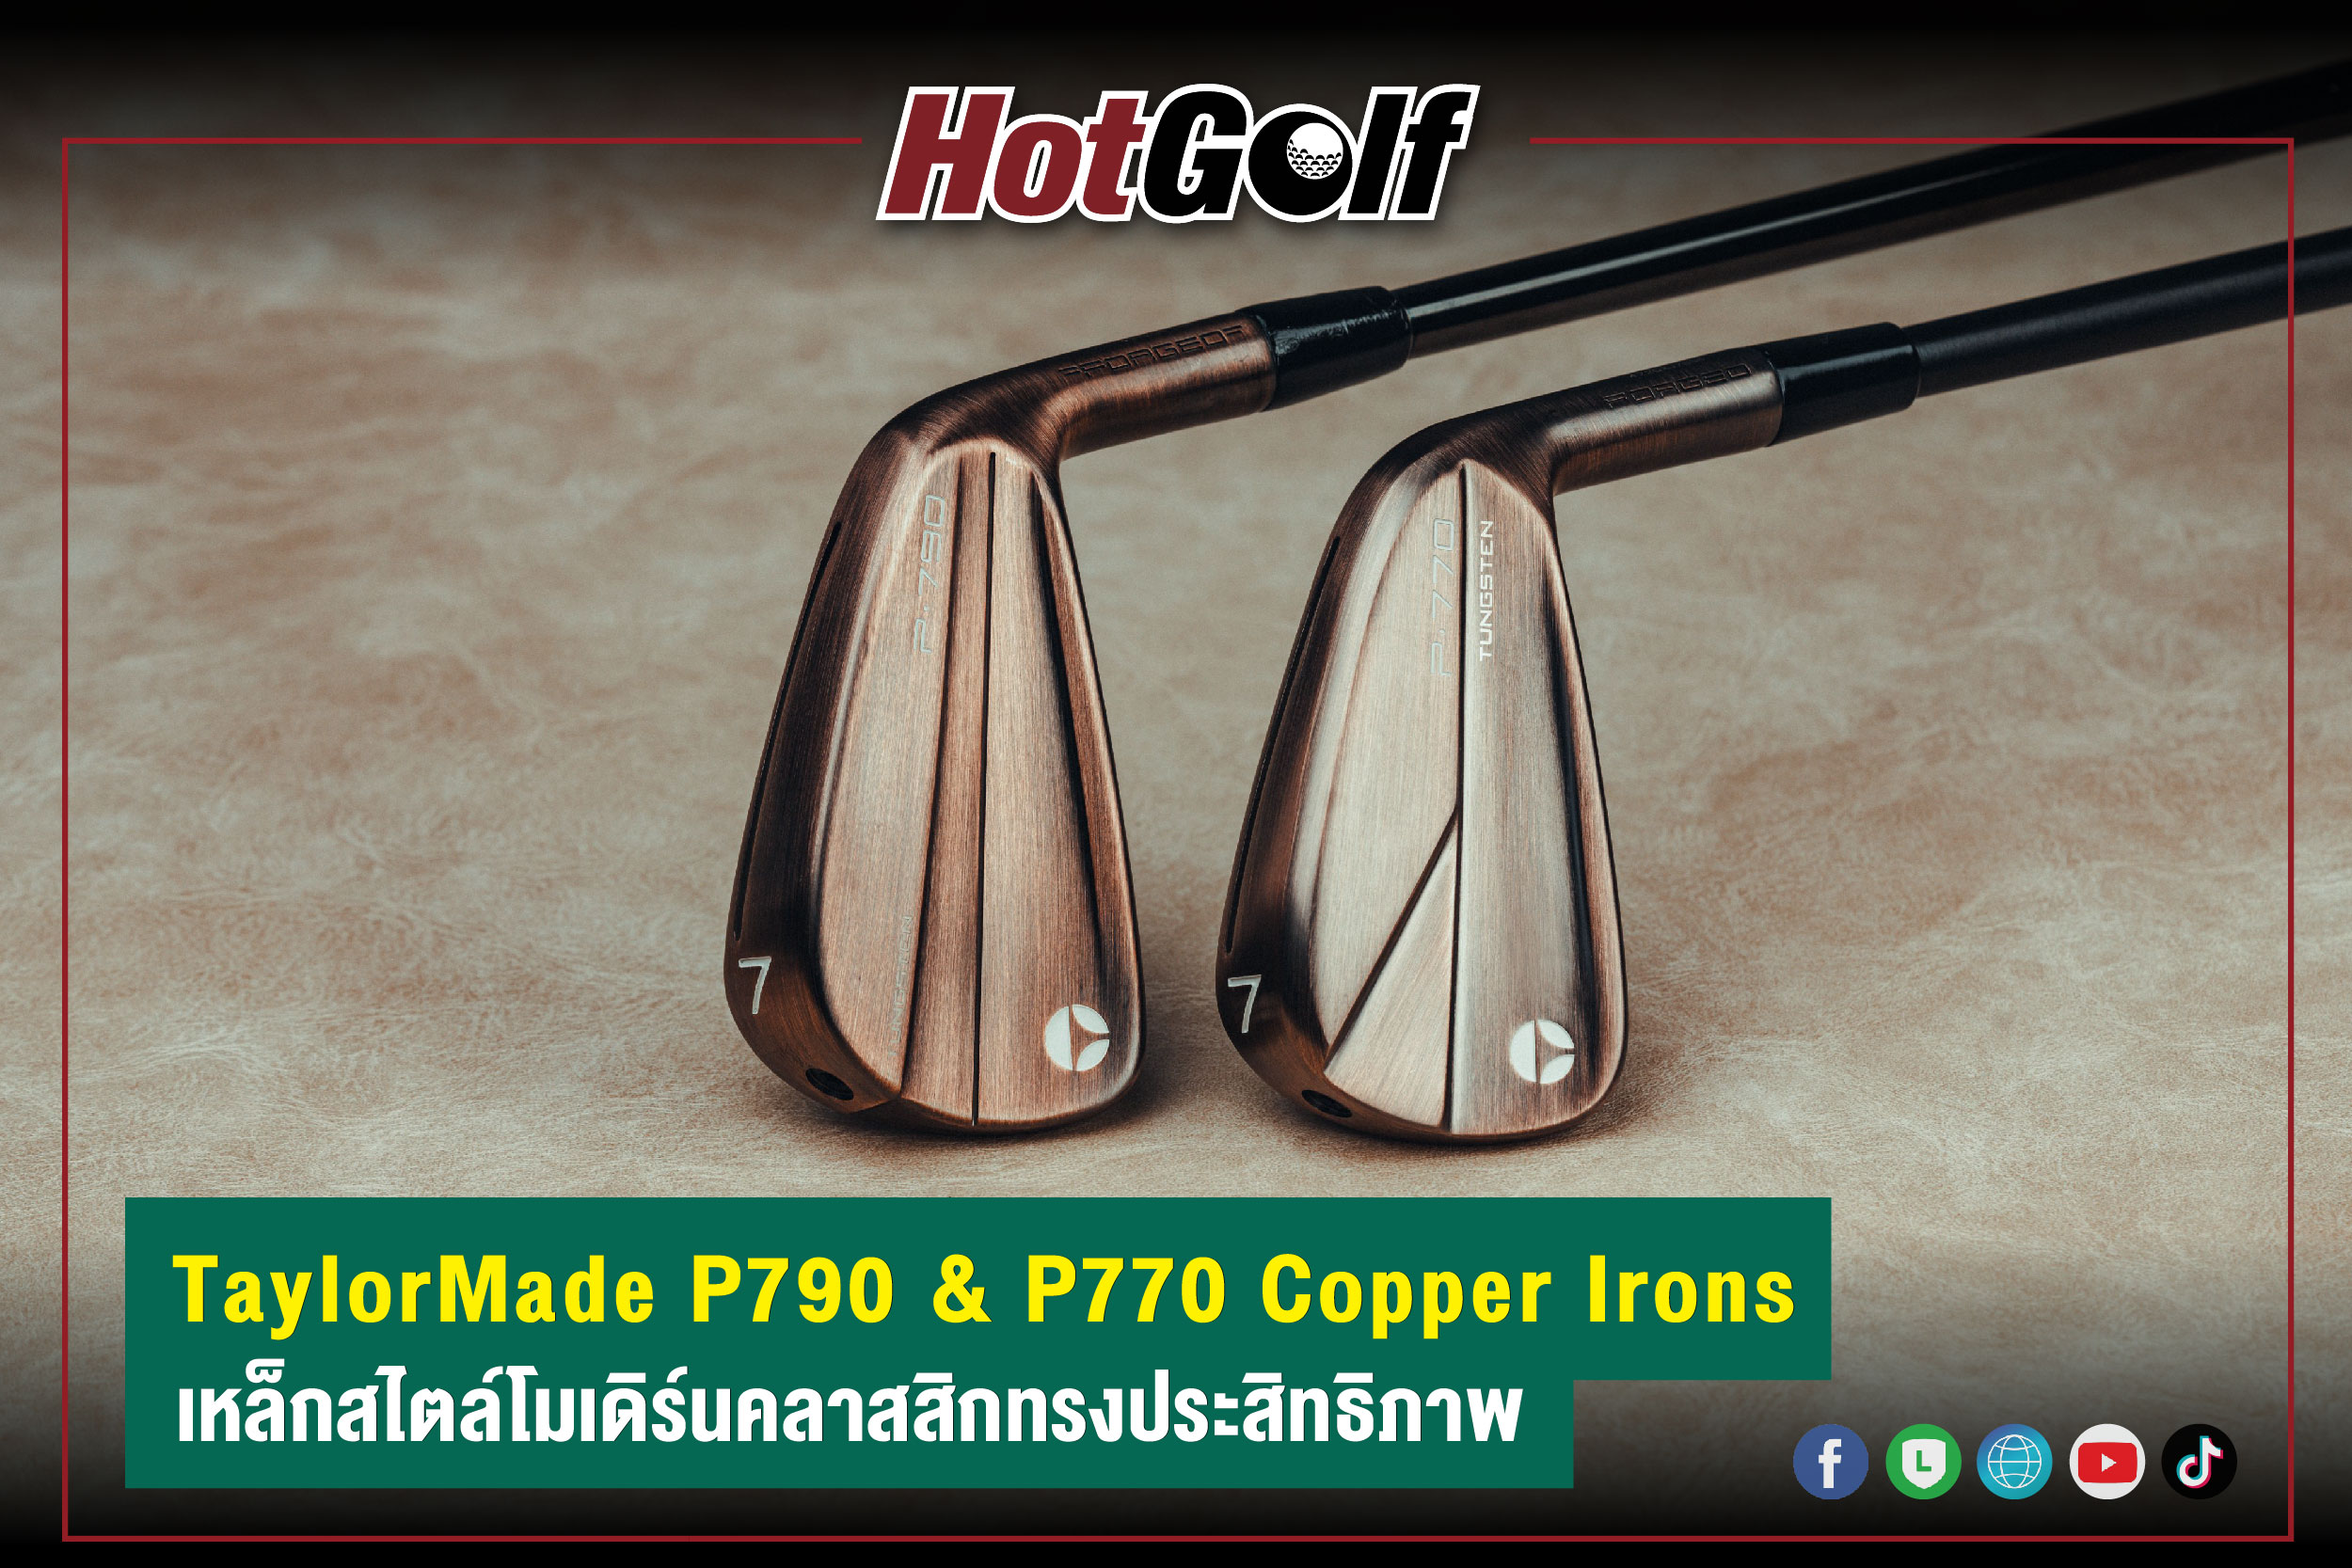 TaylorMade P790 & P770 Copper Irons เหล็กสไตล์โมเดิร์นคลาสสิคทรงประสิทธิภาพ